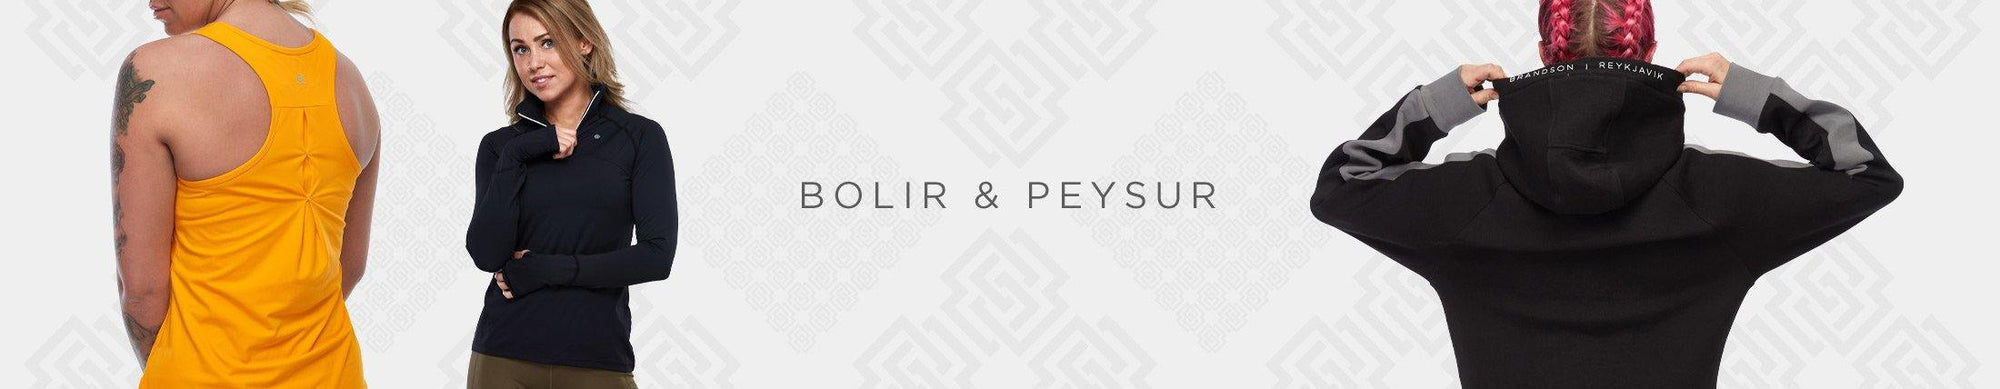 Konur - Bolir & Peysur